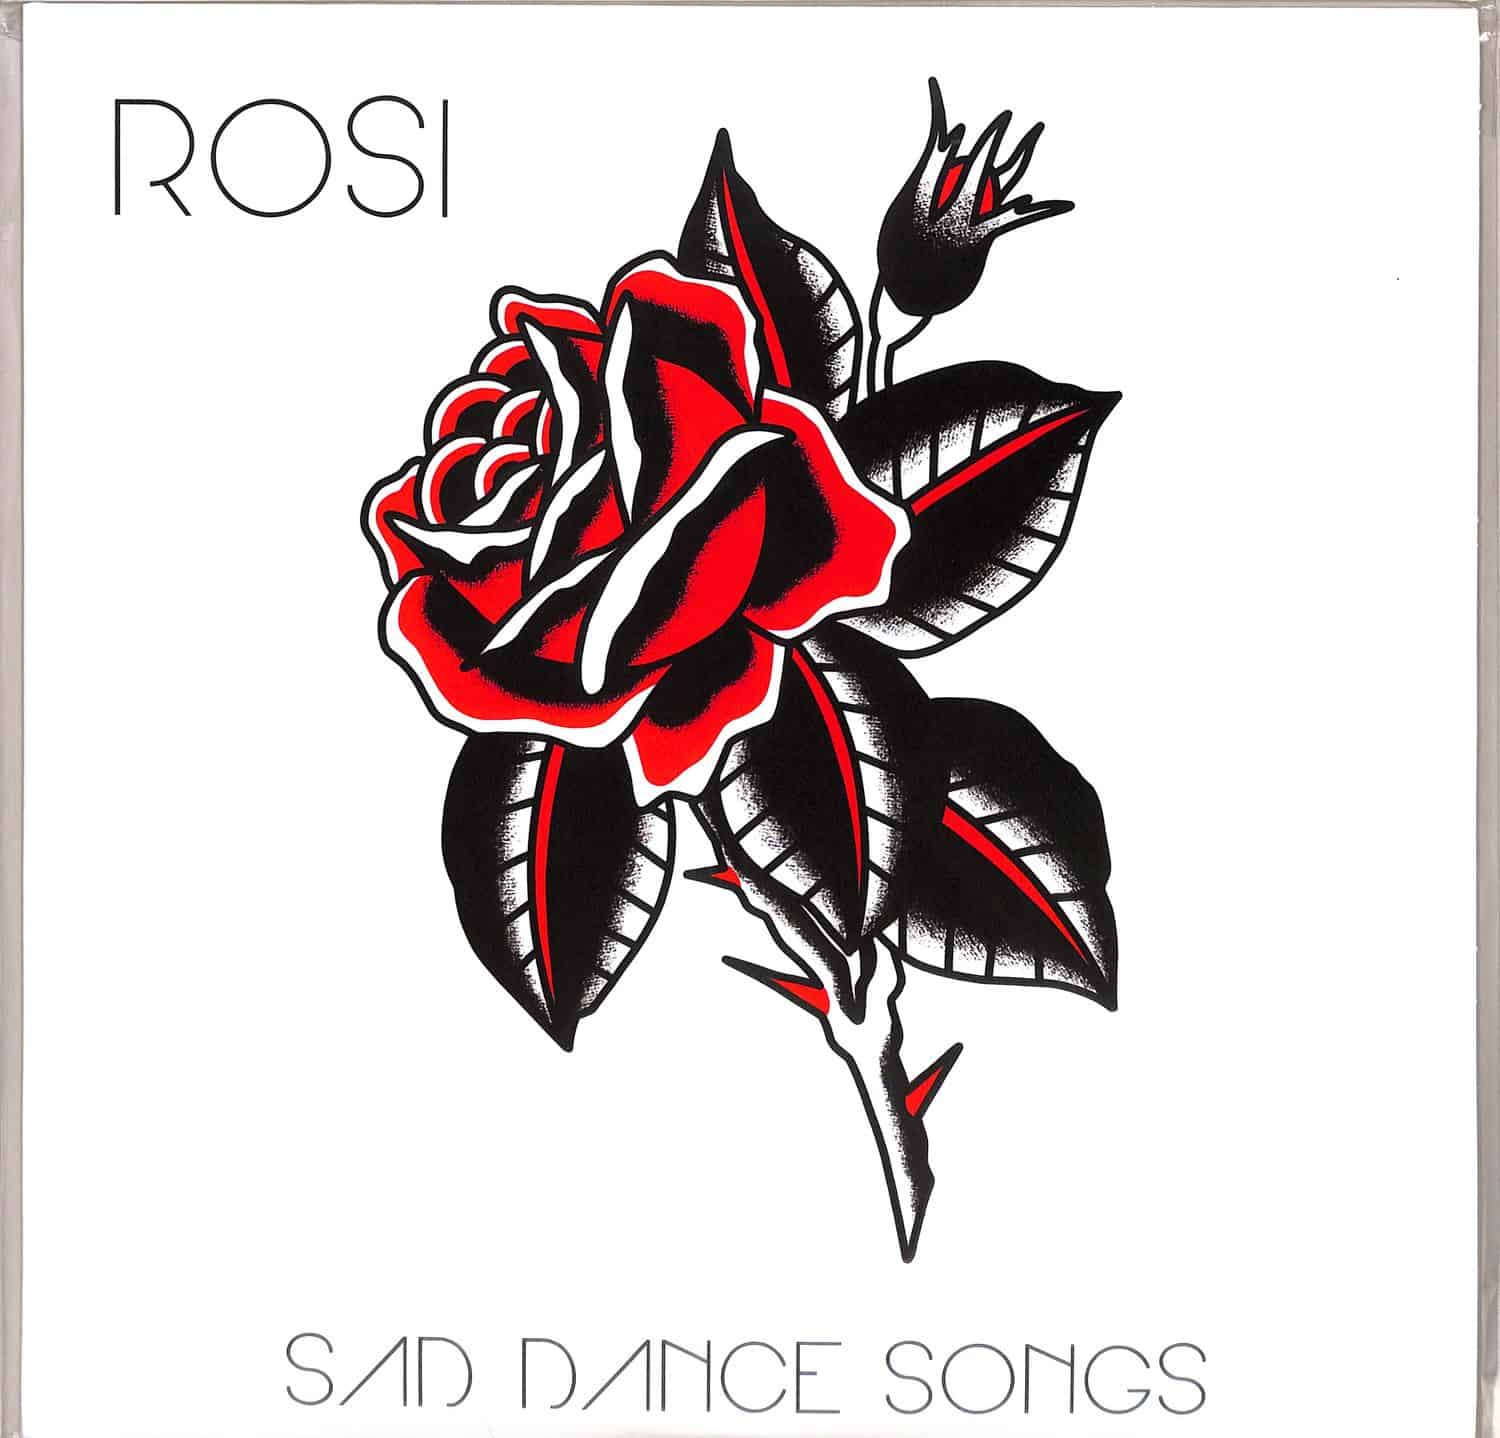 Rosi - SAD DANCE SONGS 